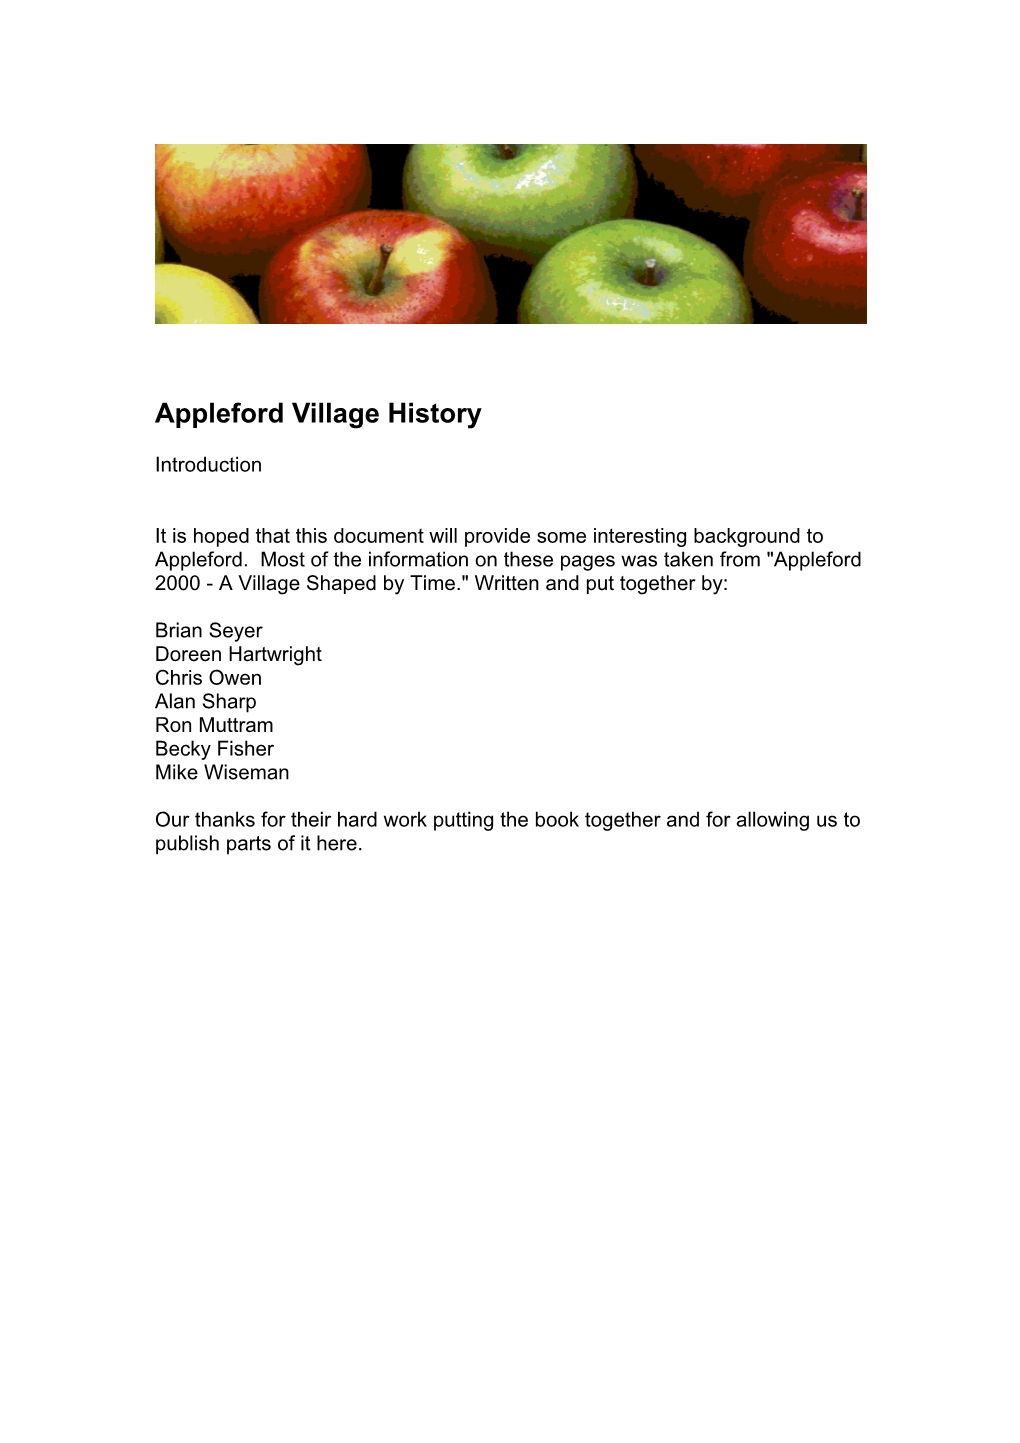 Appleford Village History